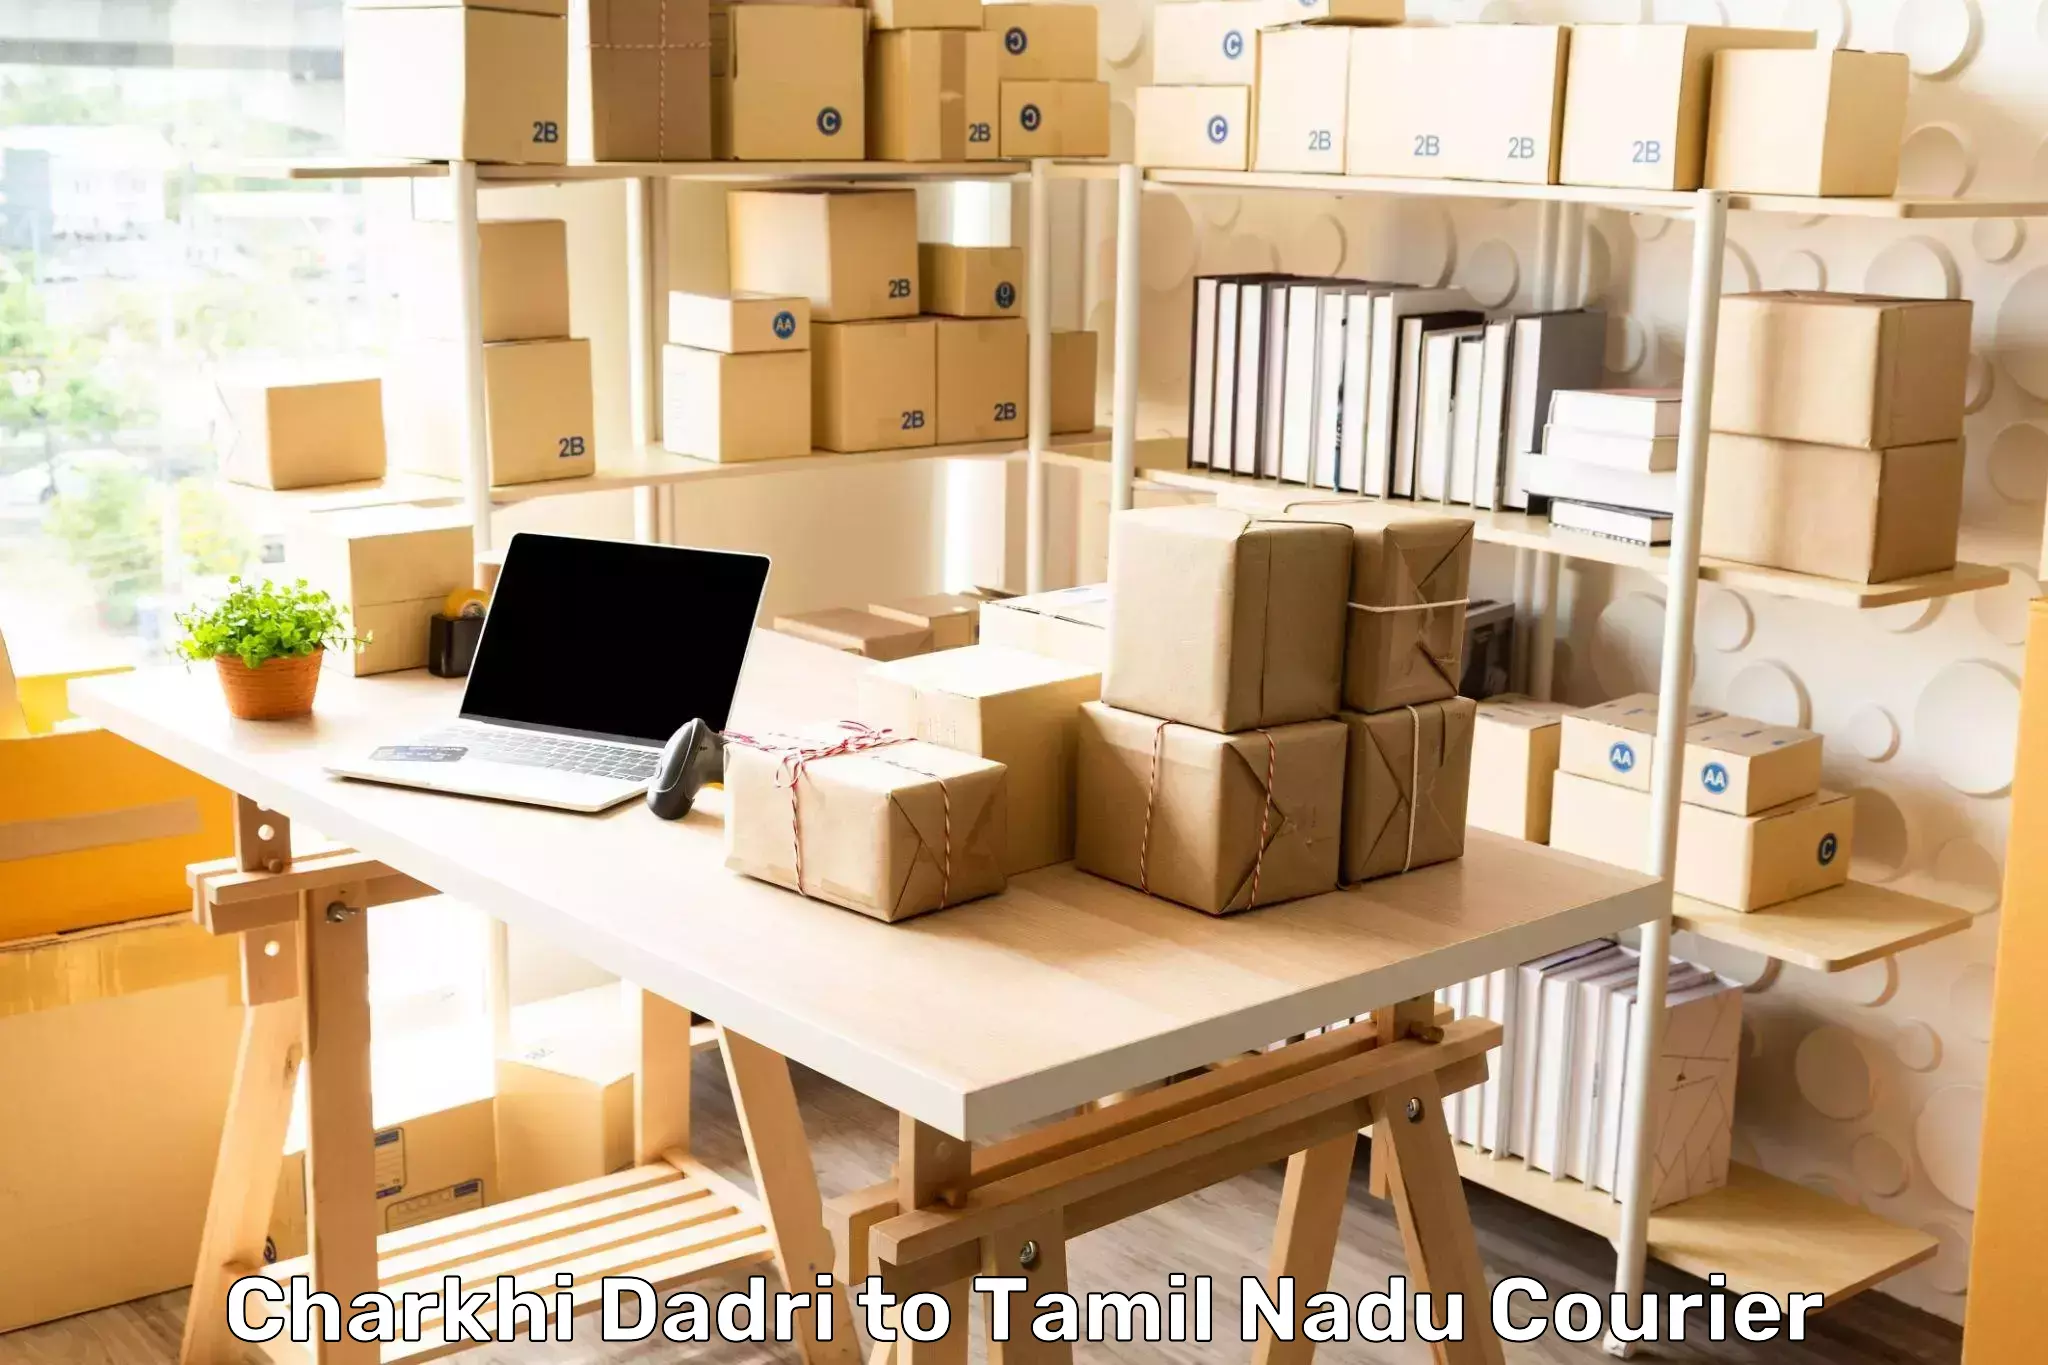 Quick dispatch service Charkhi Dadri to Tamil Nadu